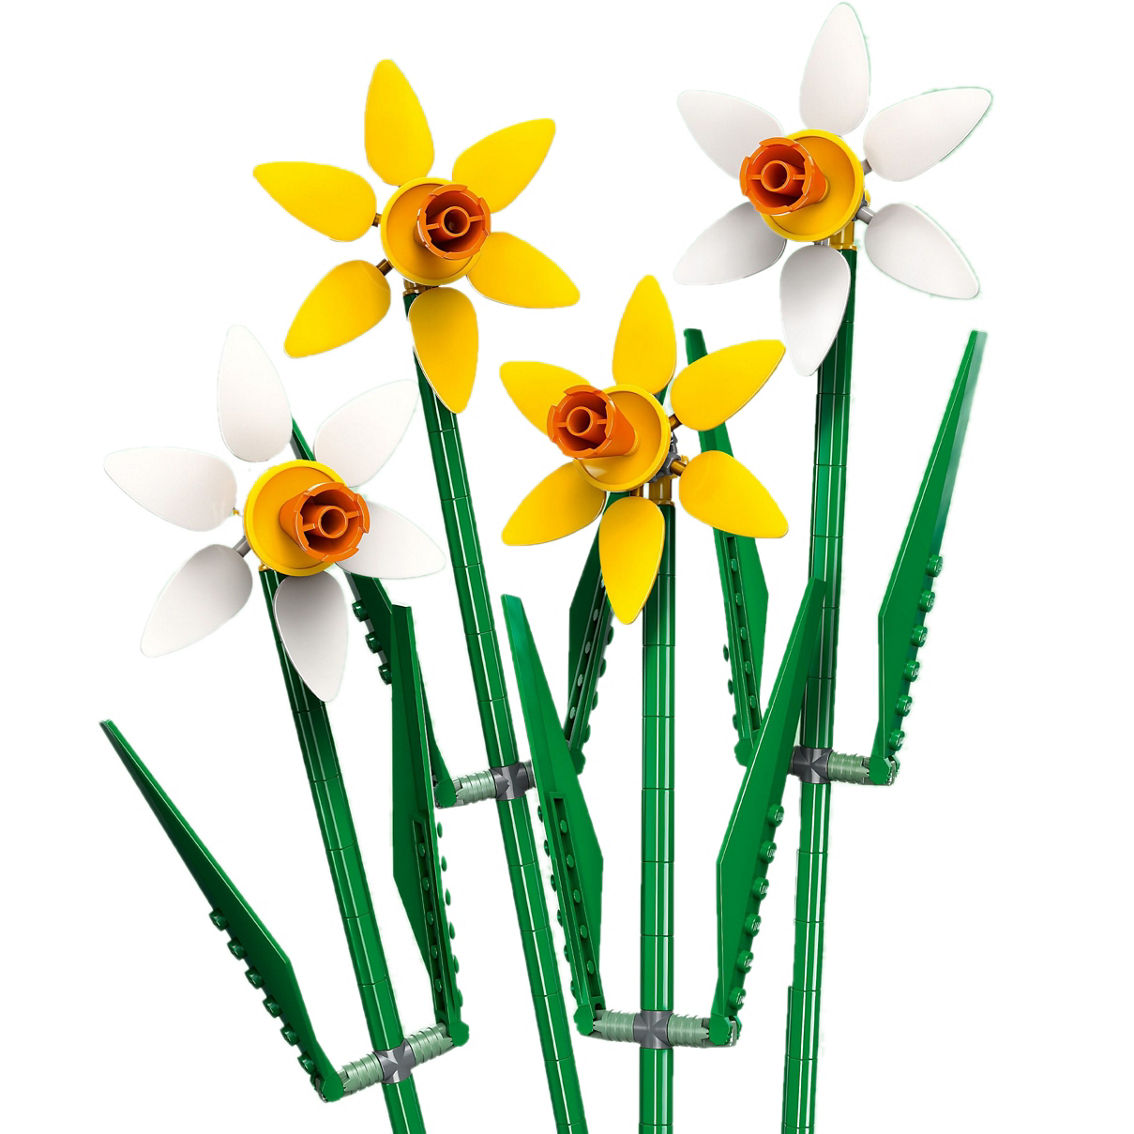 LEGO Daffodils 40747 - Image 5 of 10